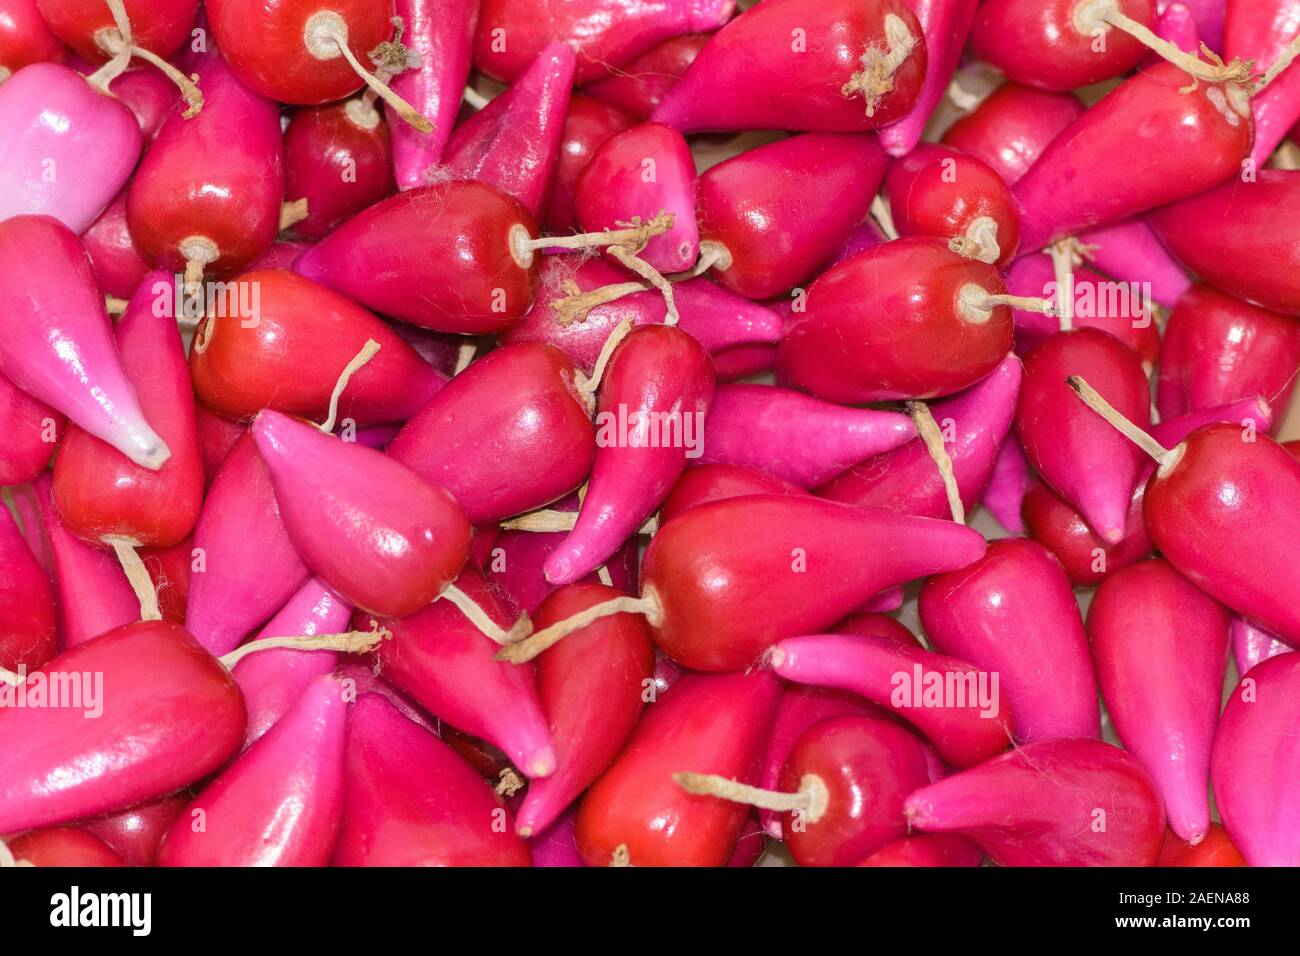 Pitiguey pink fruits assortment marketplace. Group Stock Photo